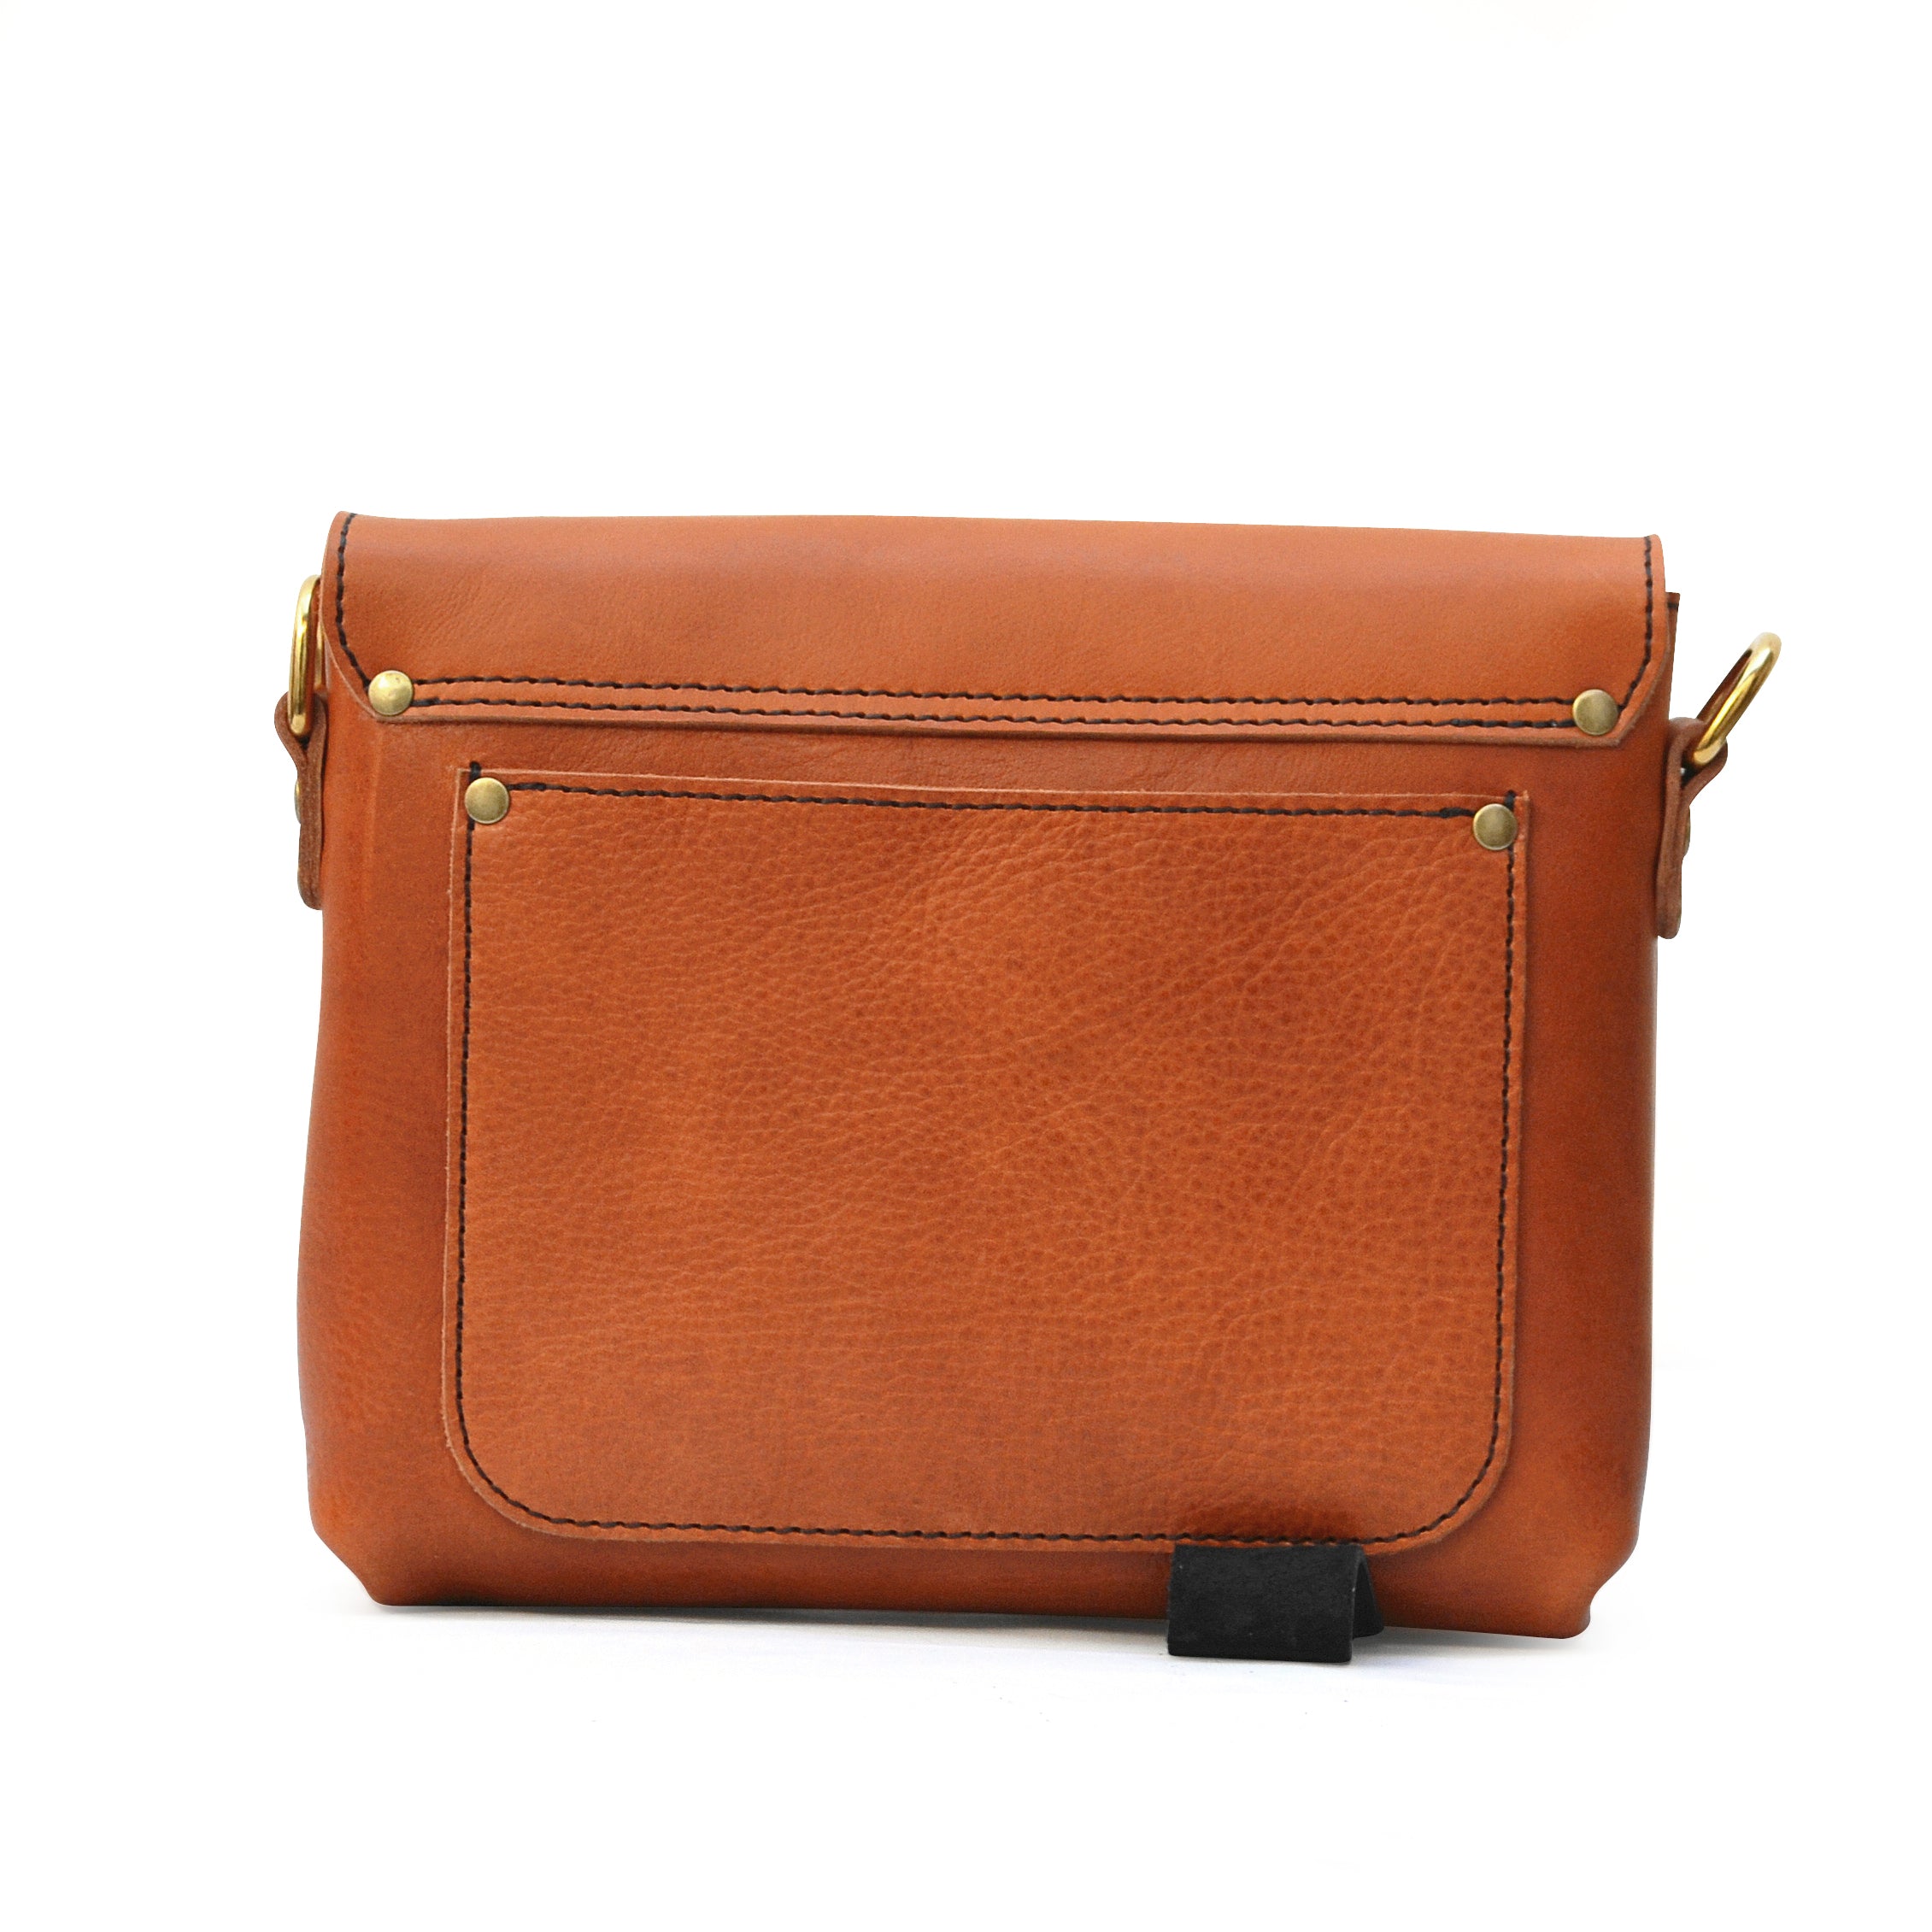 Buy Berliner Bags Vintage Leather Shoulder Bag Marbella M, Small Crossbody  Handbag for Women - Brown at Amazon.in